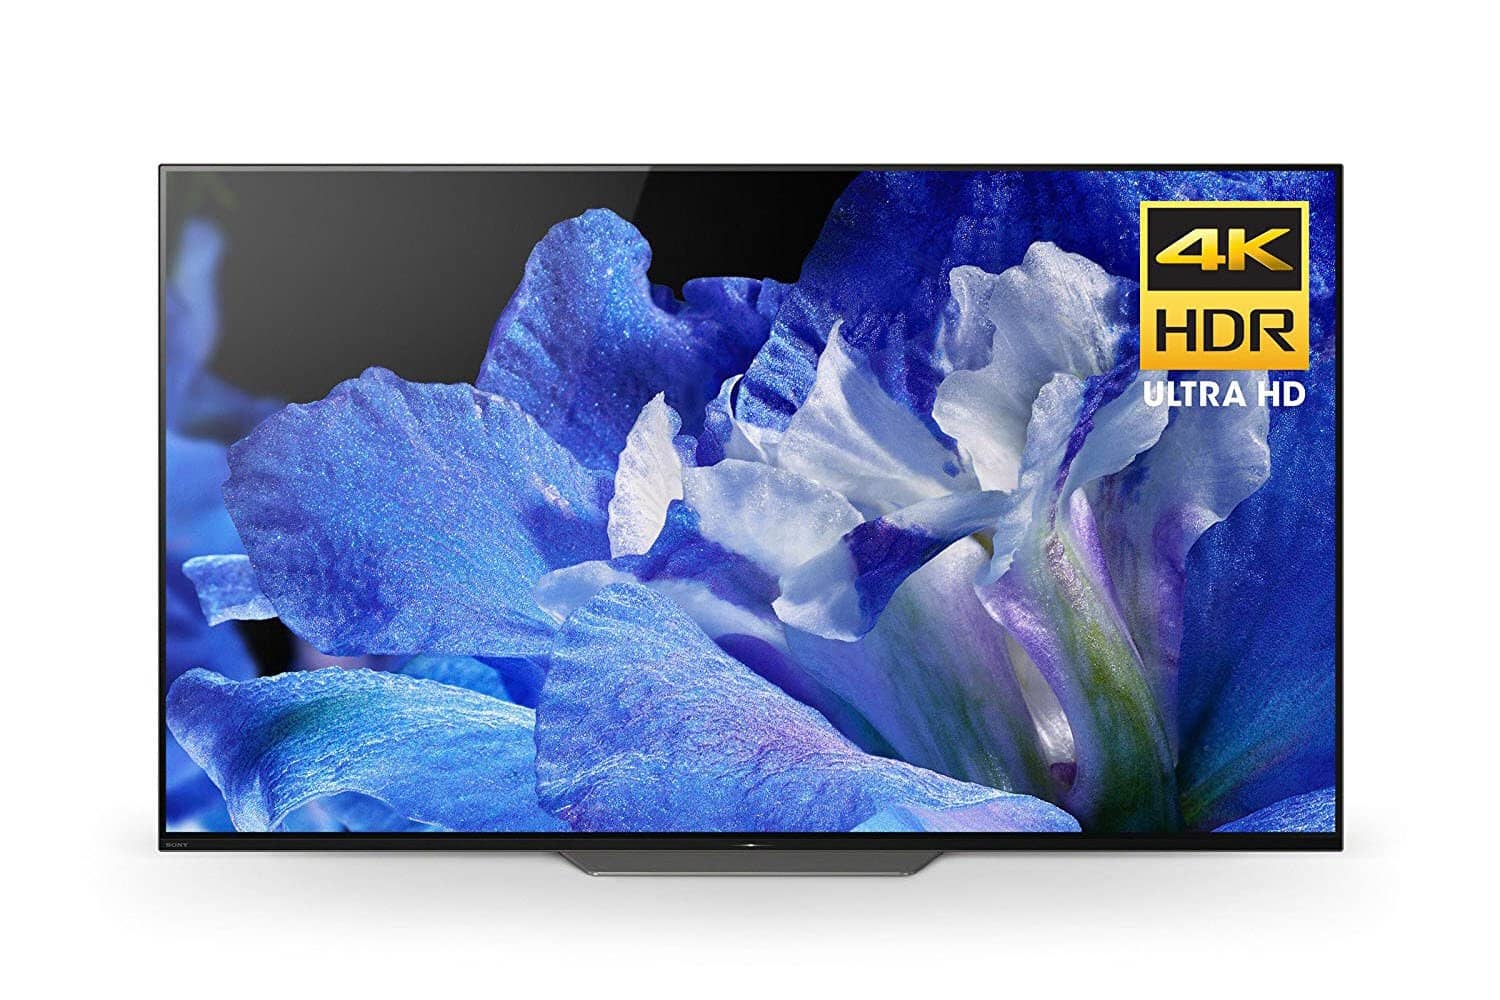 Sony XBR55A8F 55-Inch 4K Ultra HD Smart LED TV and UBP-X700 4K Ultra HD Blu-ray Player